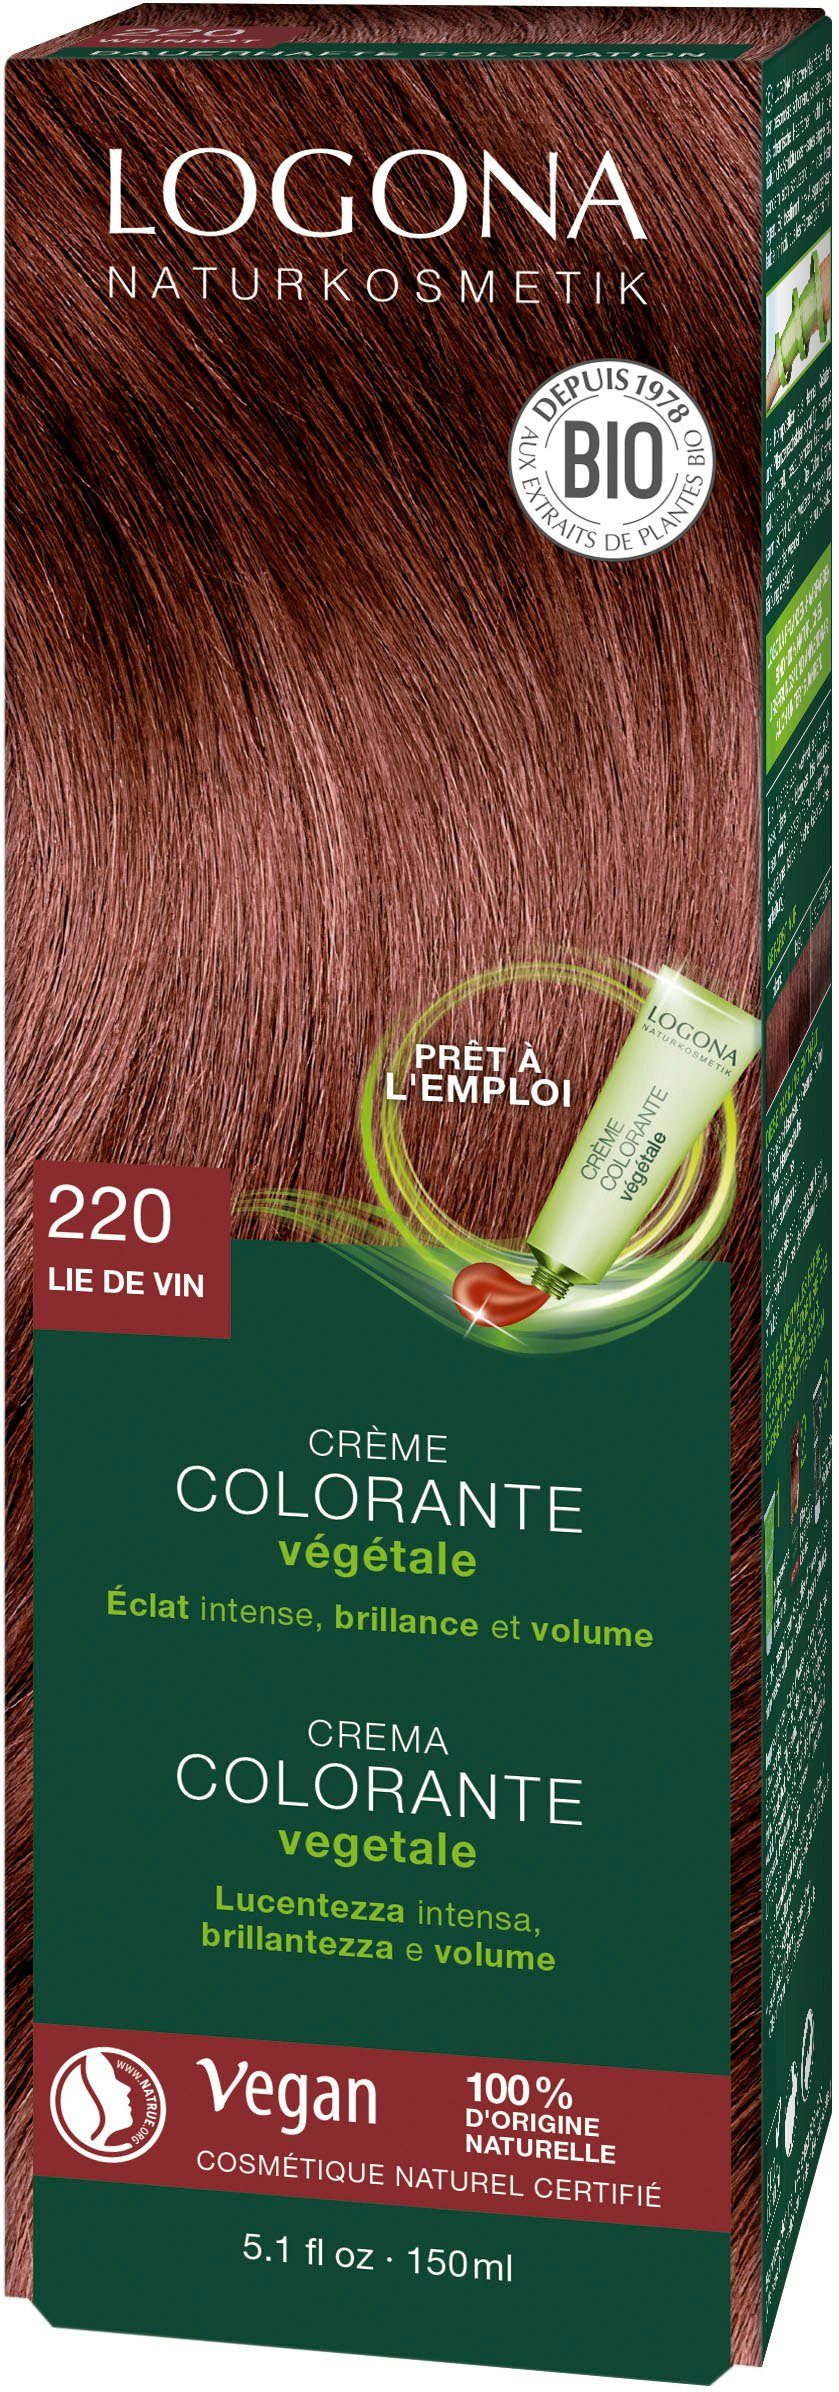 LOGONA Haarfarbe Creme 220 Pflanzen-Haarfarbe weinrot Logona